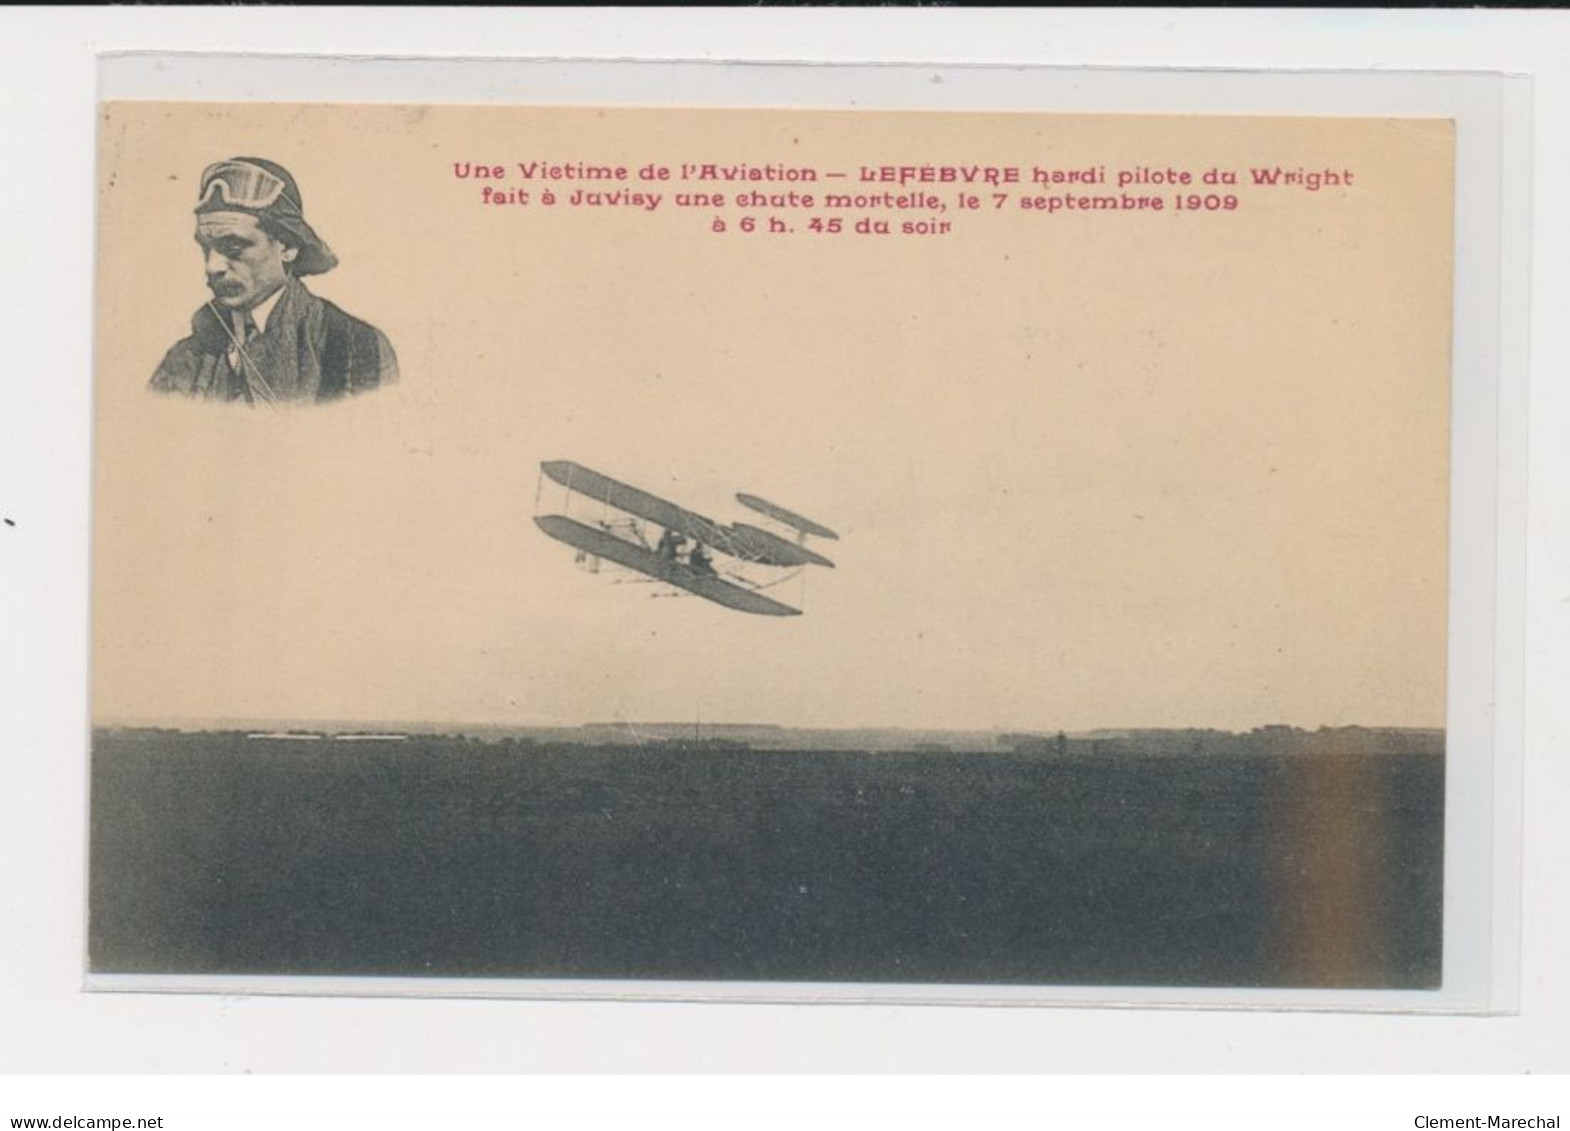 JUVISY - Port-Aviation - Une Victime De L'aviation - Lefebvre Hardi Pilote Du Wright - Chute Mortelle - 1909 - état - Juvisy-sur-Orge